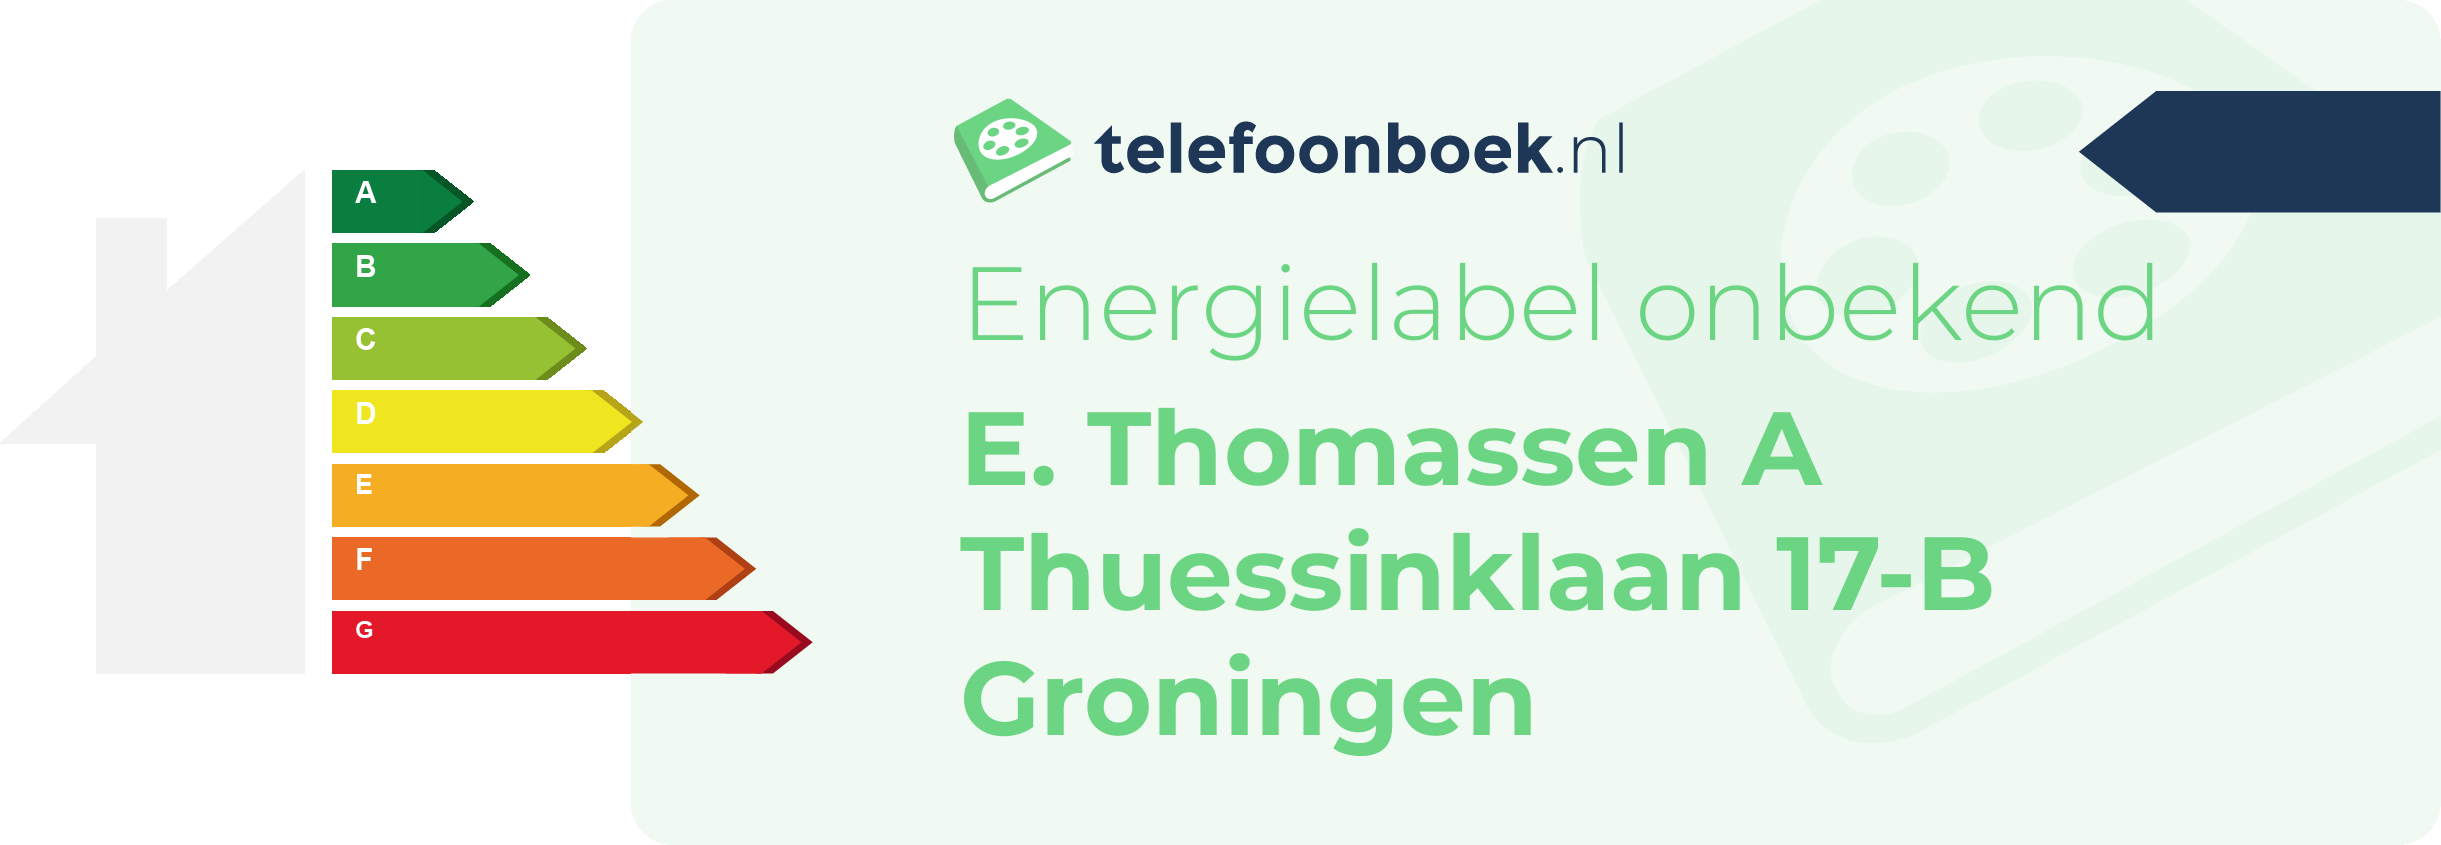 Energielabel E. Thomassen A Thuessinklaan 17-B Groningen